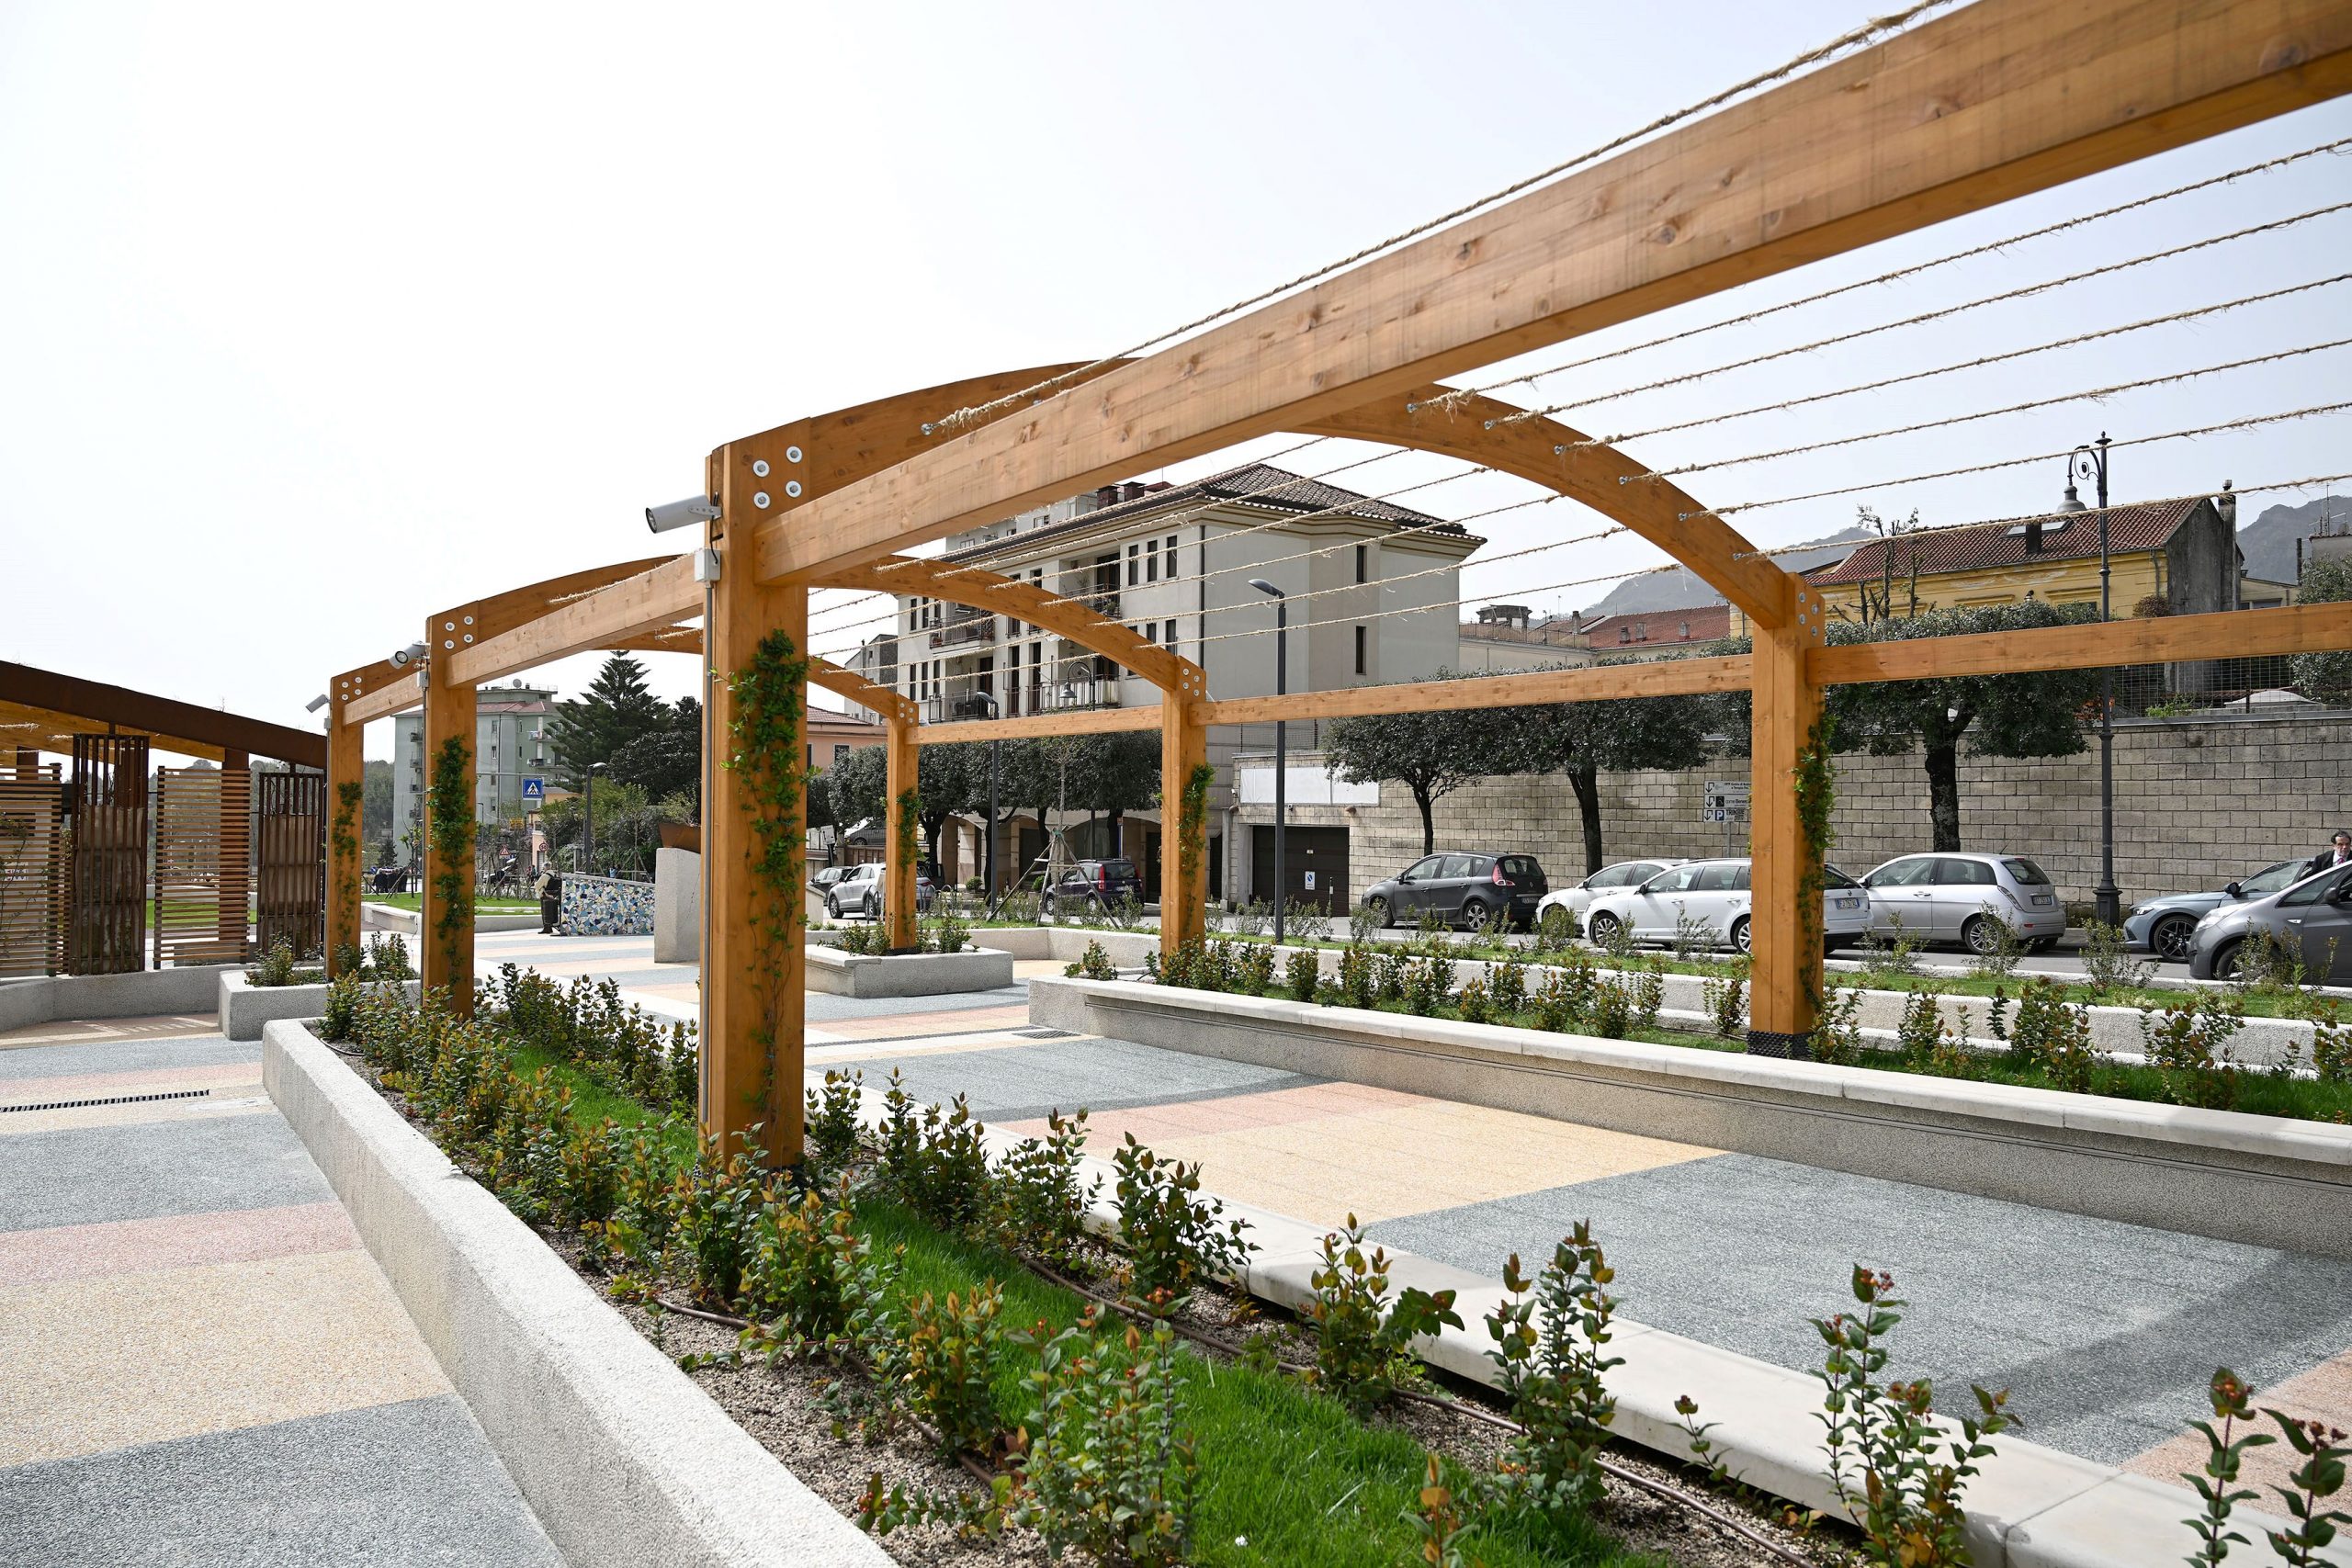 New urban park in Cava, ‘European City’